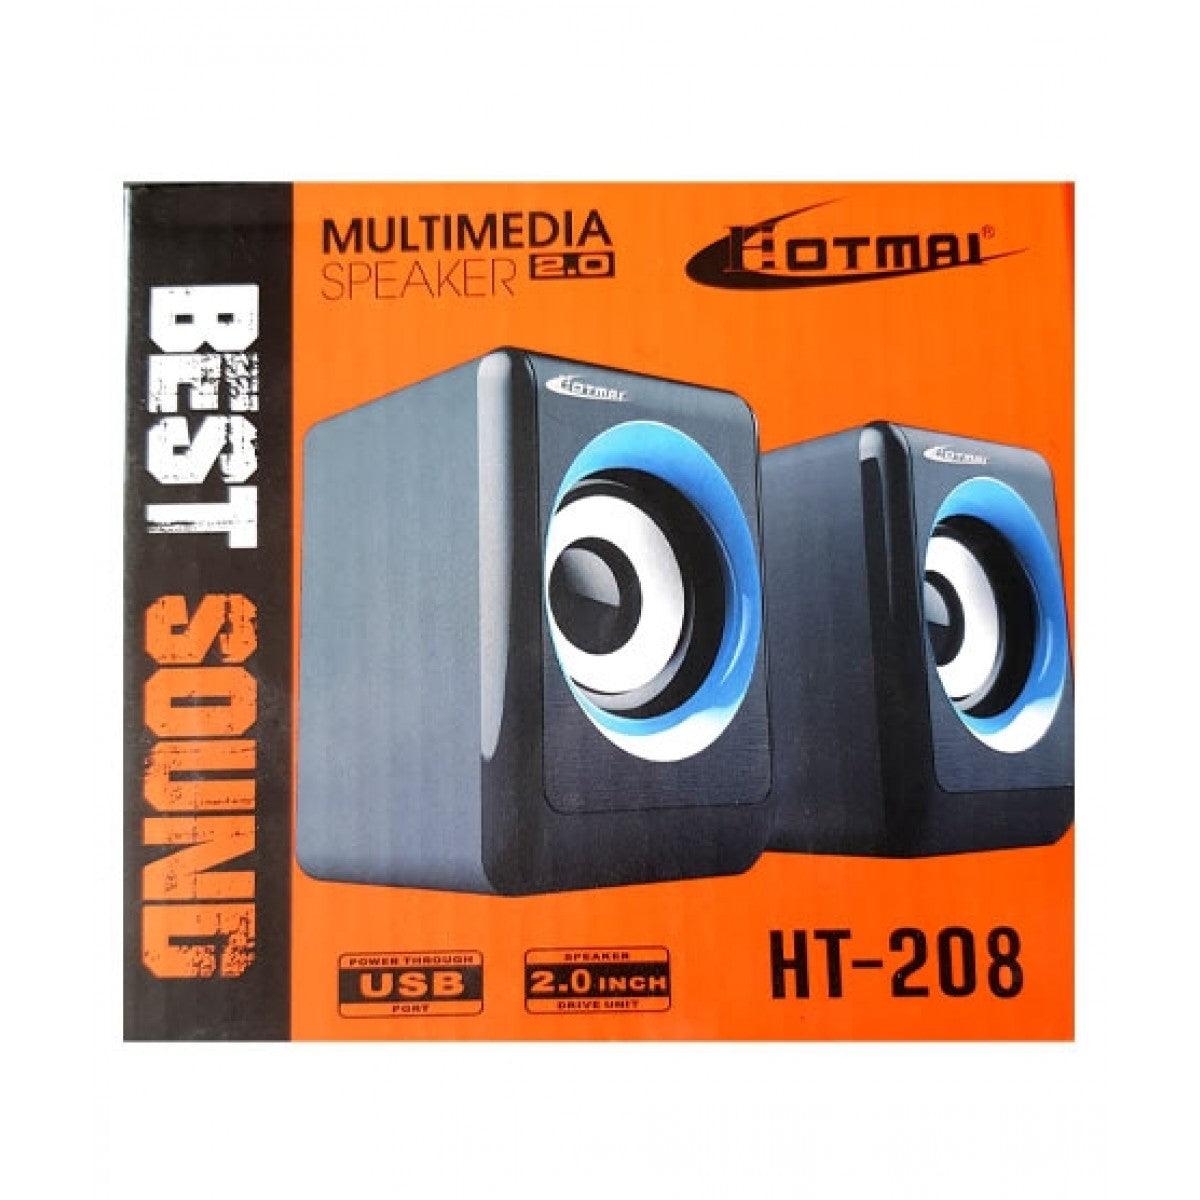 HOTMAI HT-208 Multimedia Speaker Best Sound Quality For LCD Laptop Computer - Basra Mobile Center